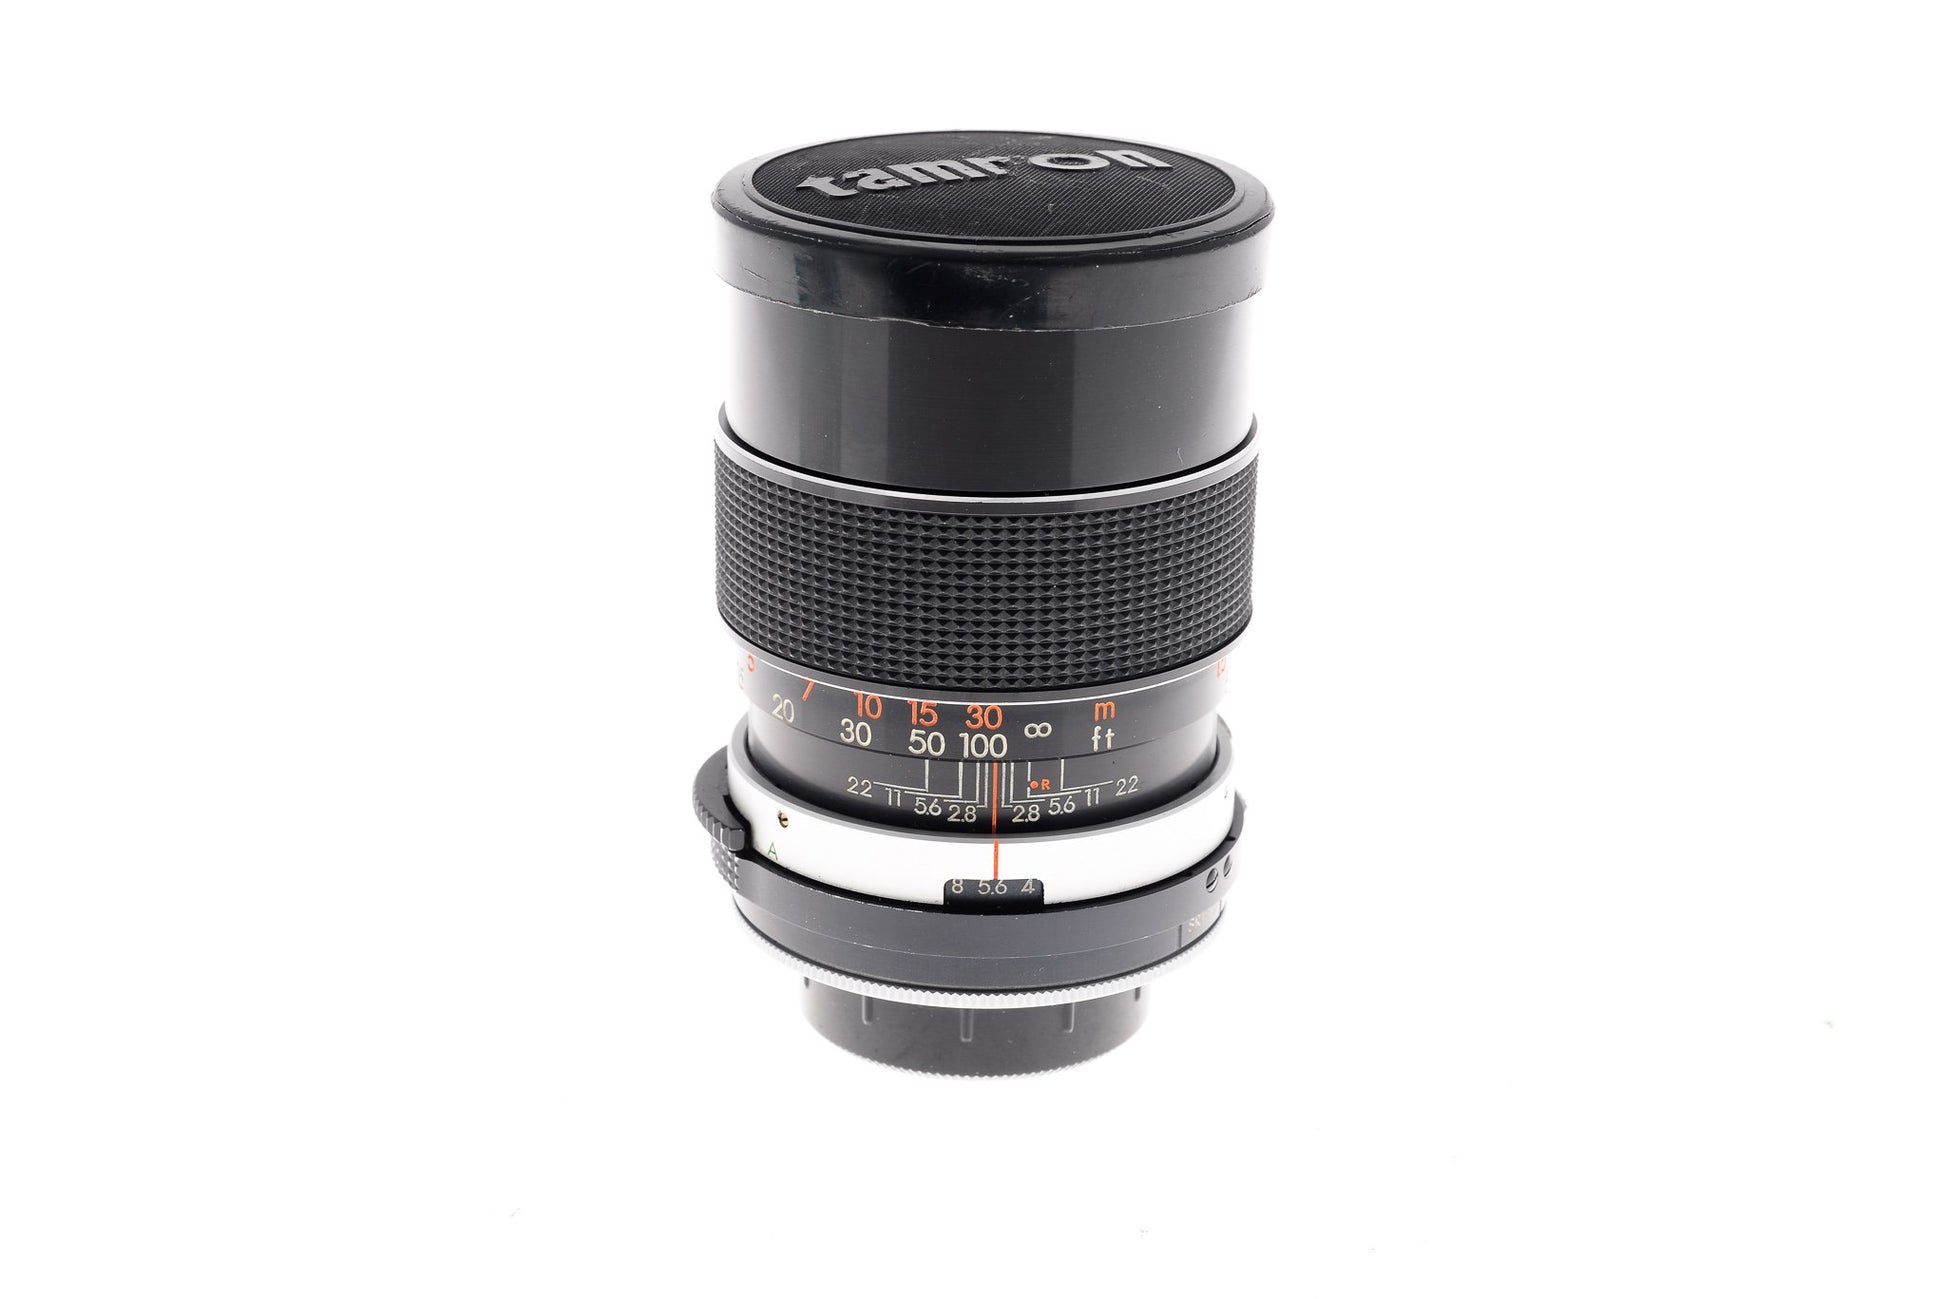 Tamron 135mm f2.8 Auto - Lens